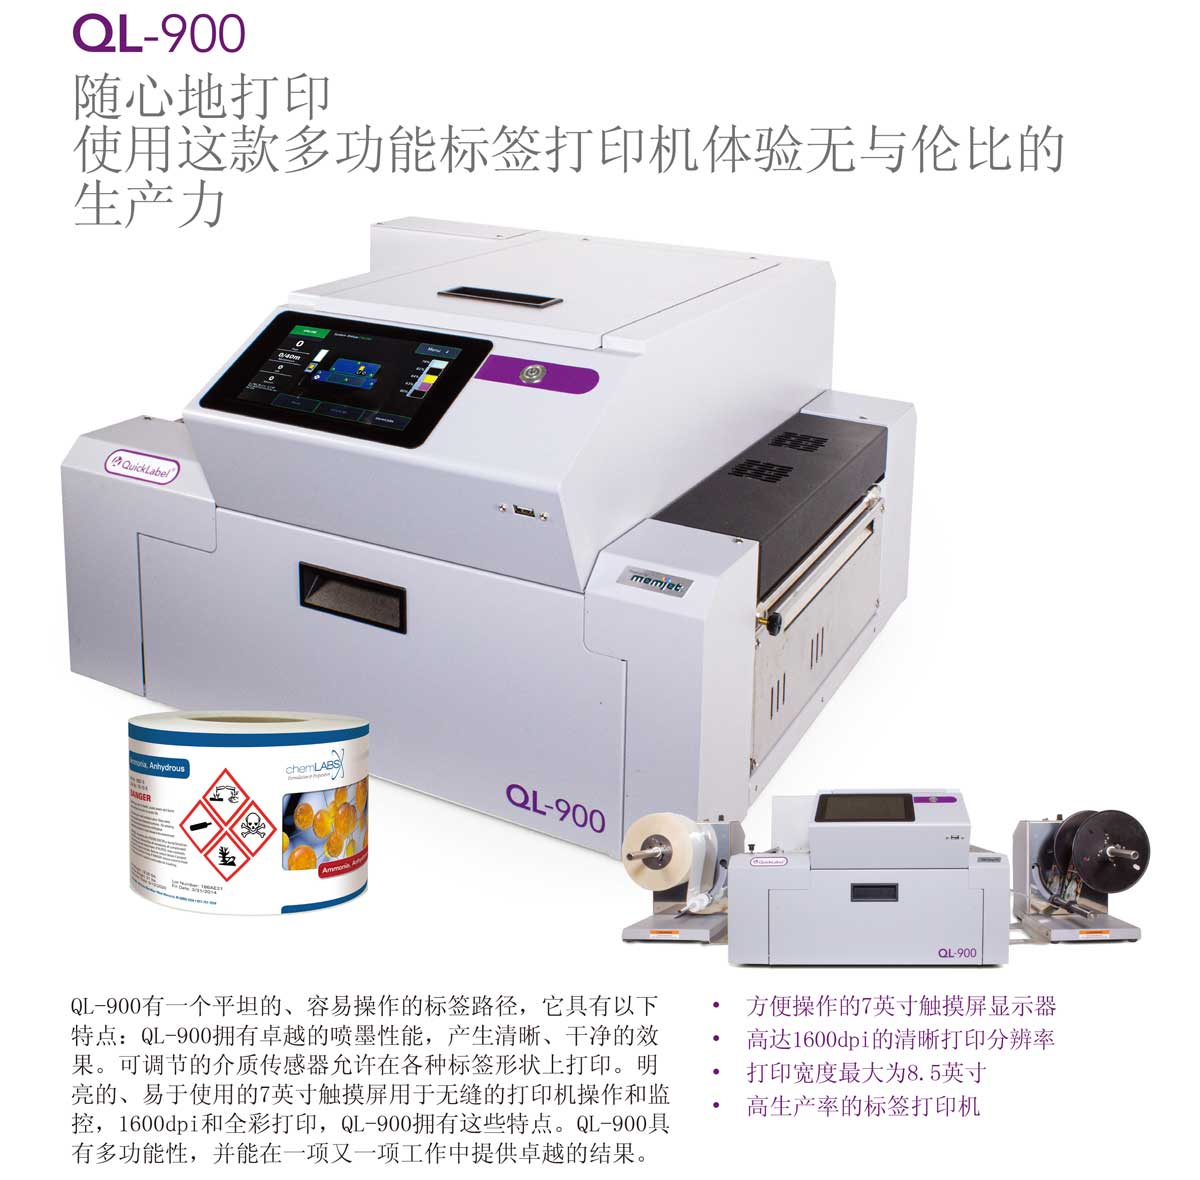 QuickLabel-QL-900-介绍-1.jpg